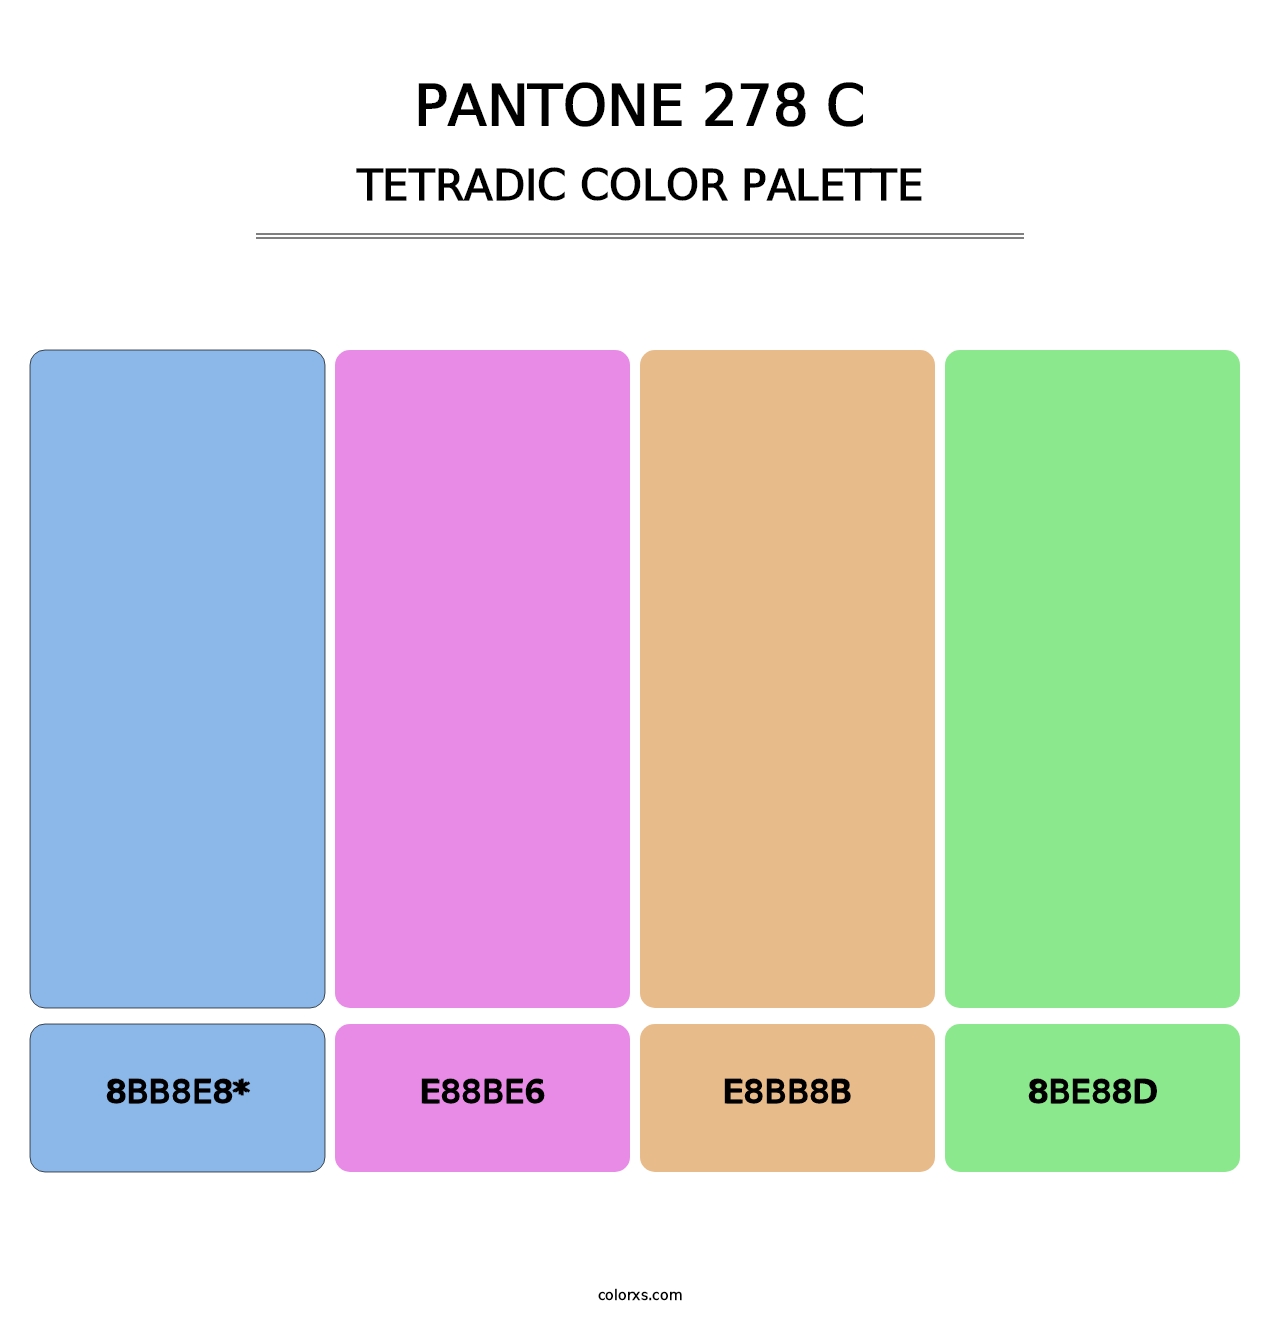 PANTONE 278 C - Tetradic Color Palette